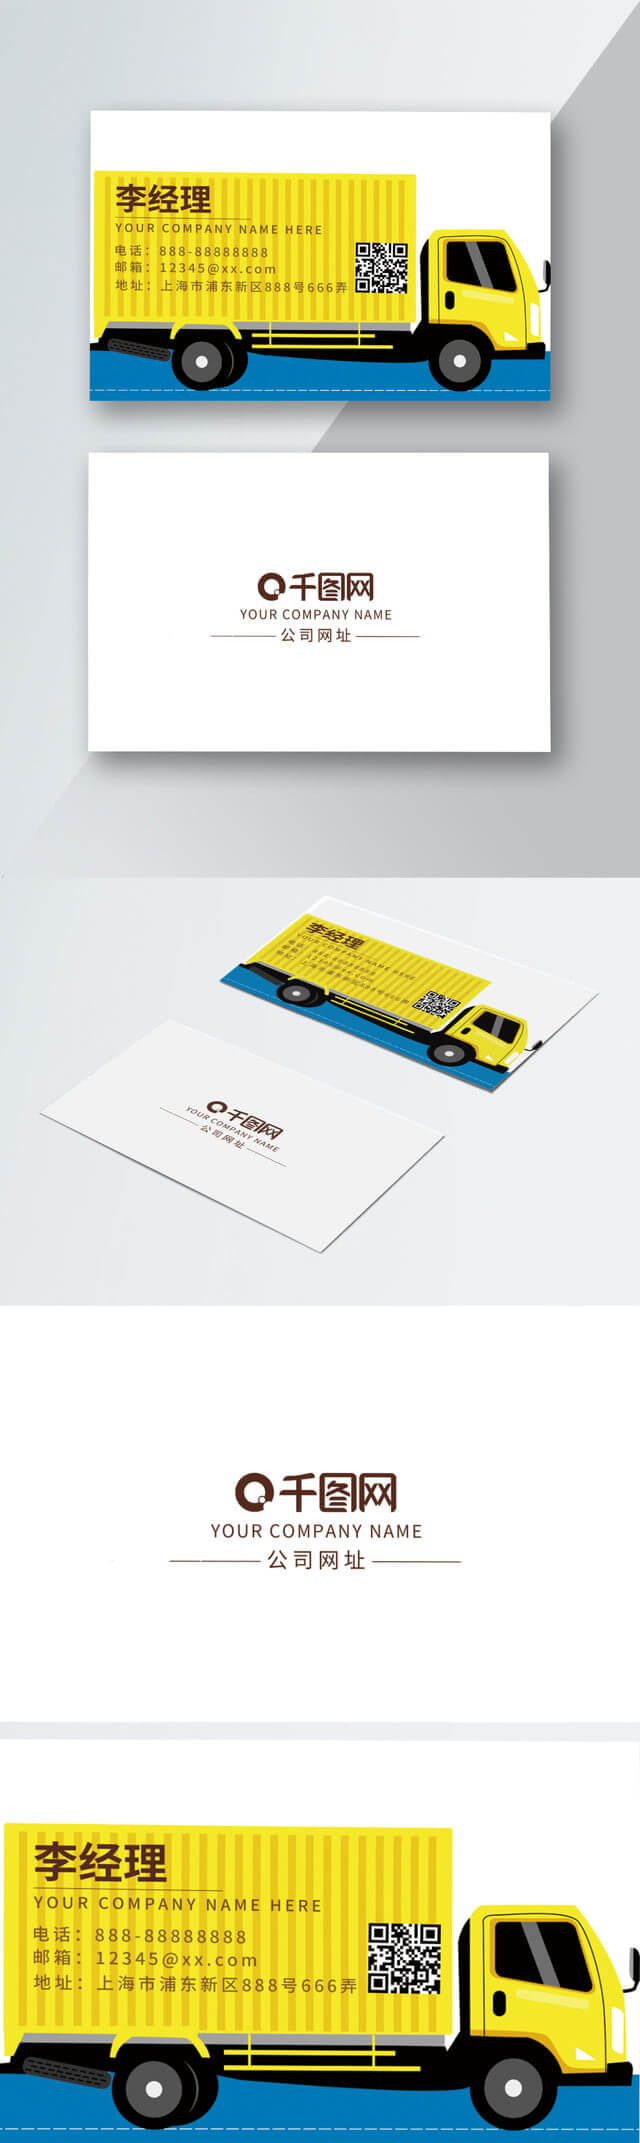 Truck Transportation Business Card Undertake Freight Inside Transport Business Cards Templates Free